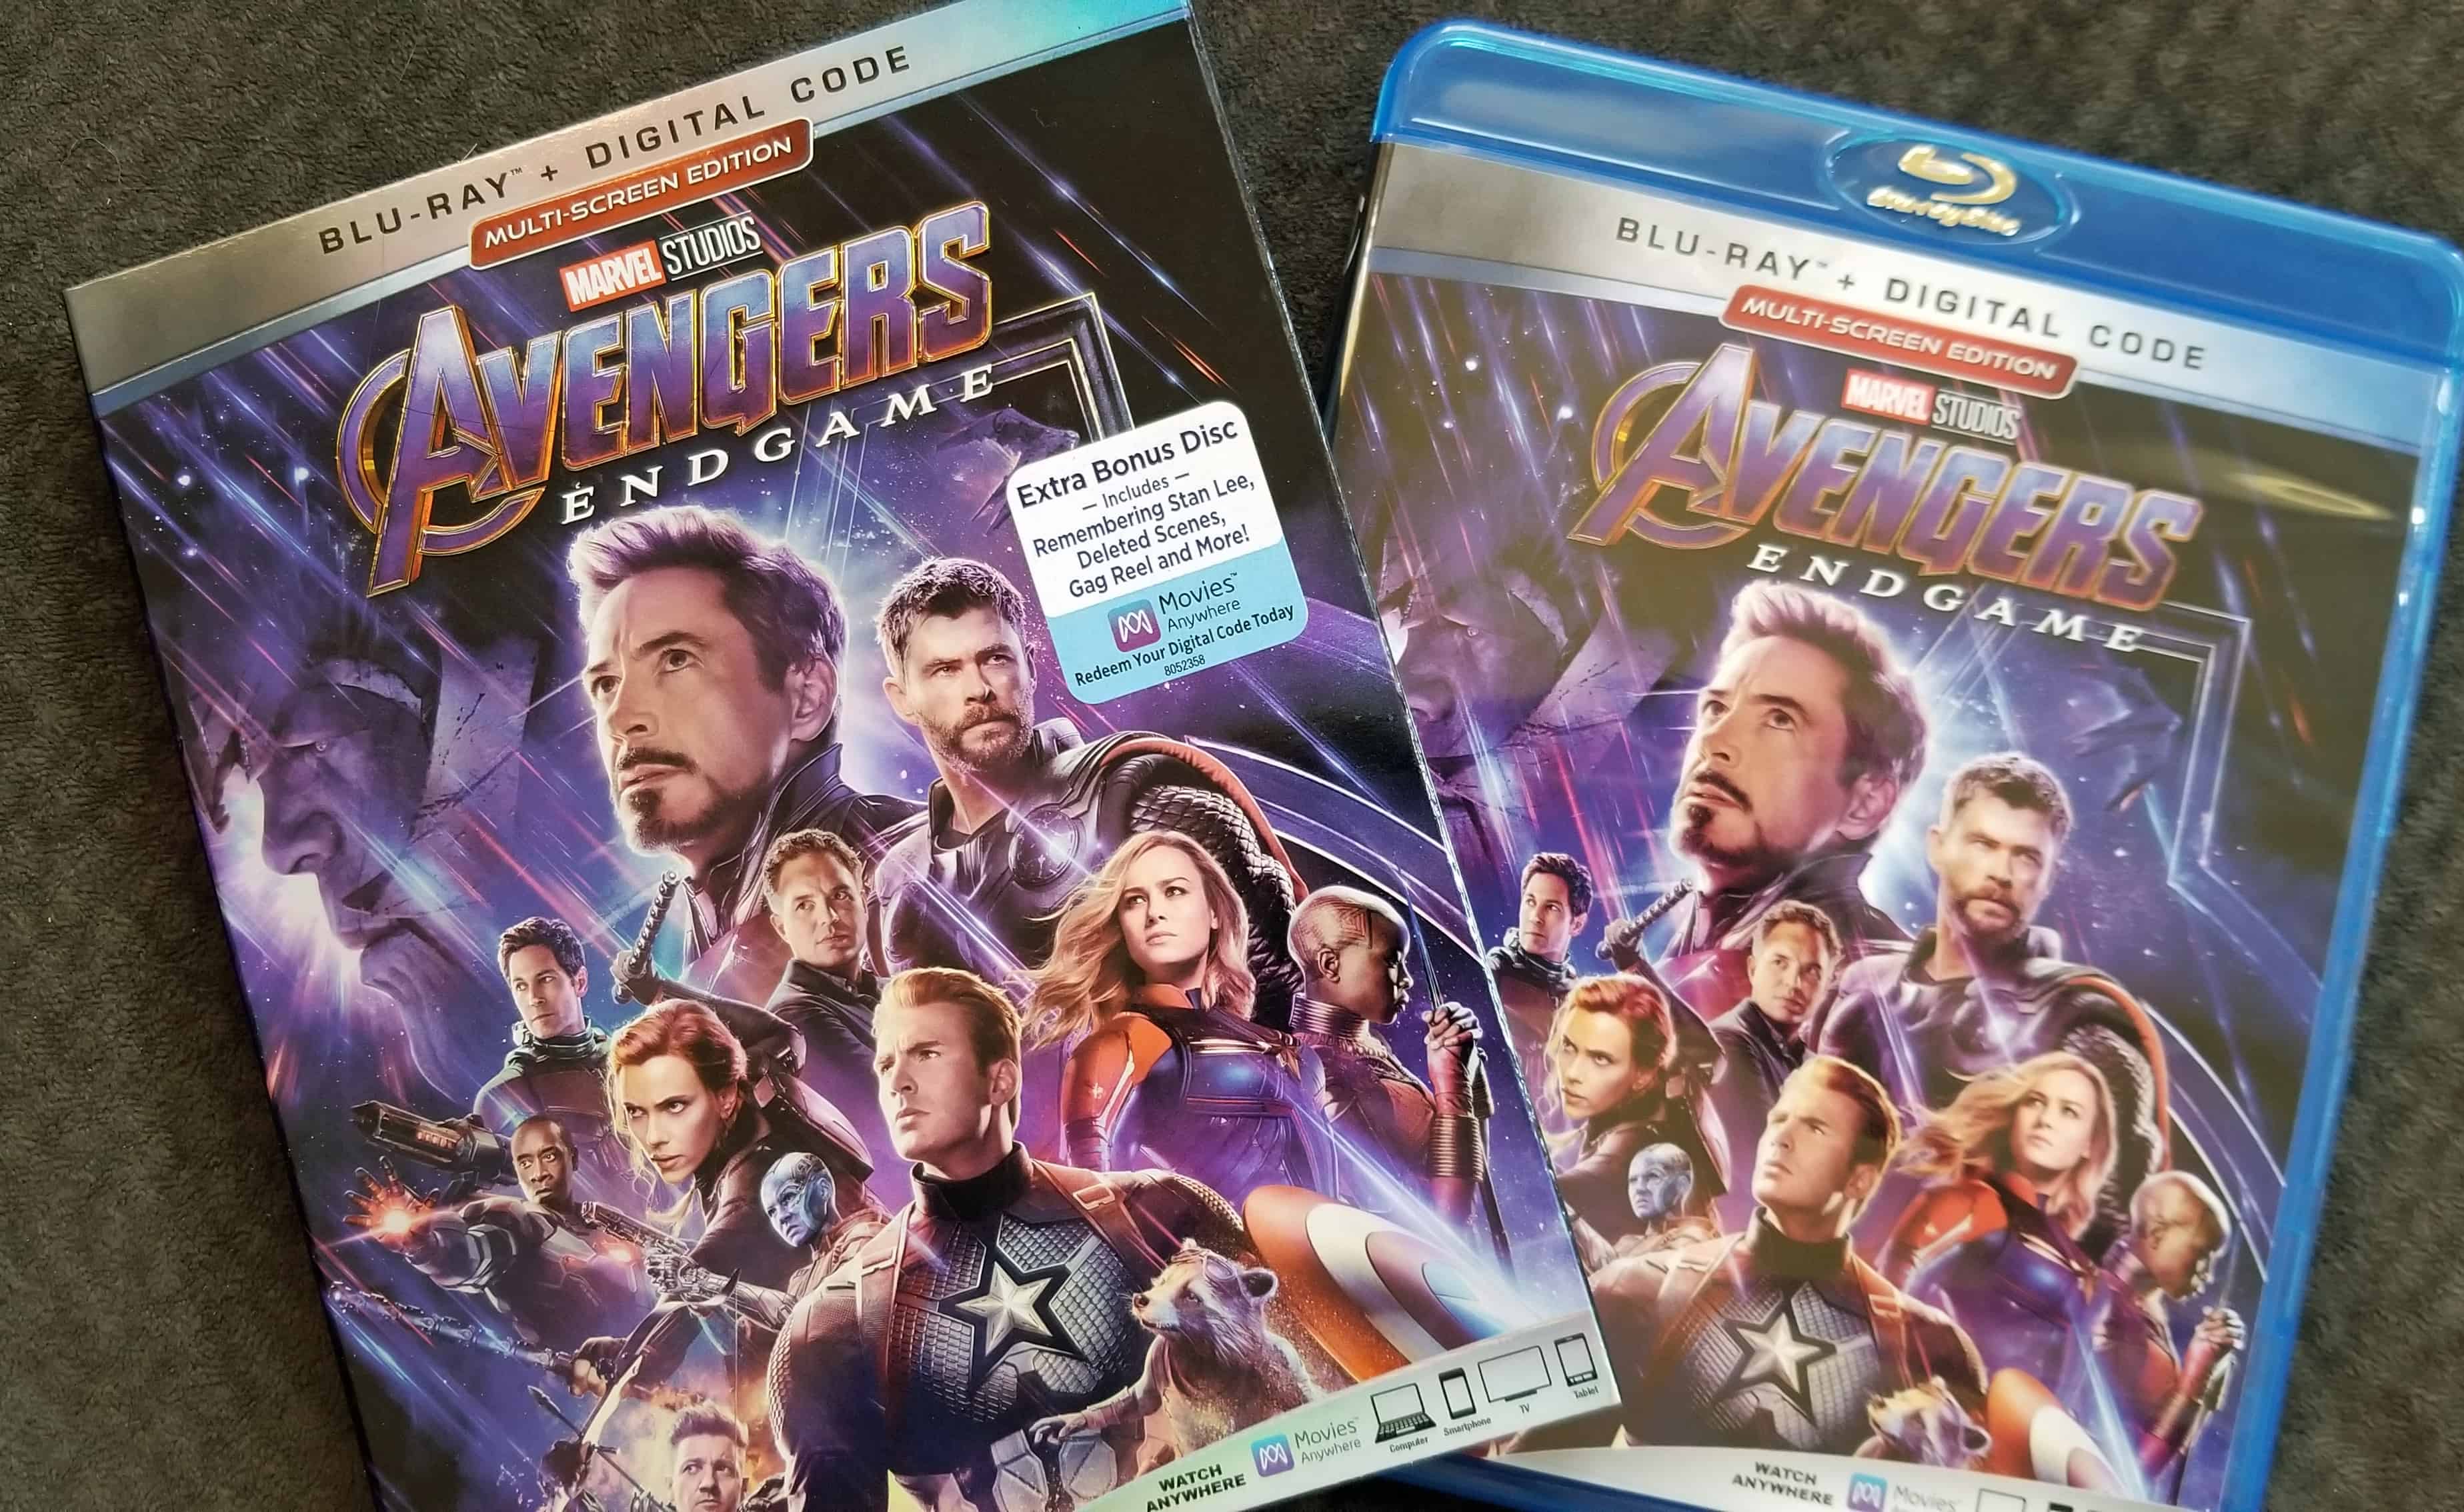 See Marvel’s Avengers: Endgame Deleted Scenes on Blu-ray August 13